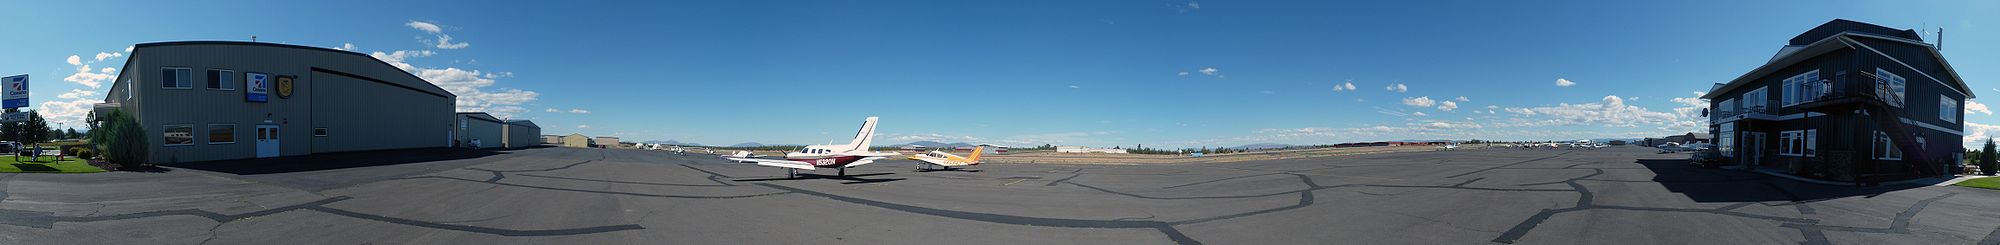 Bend Municipal Airport im August 2010